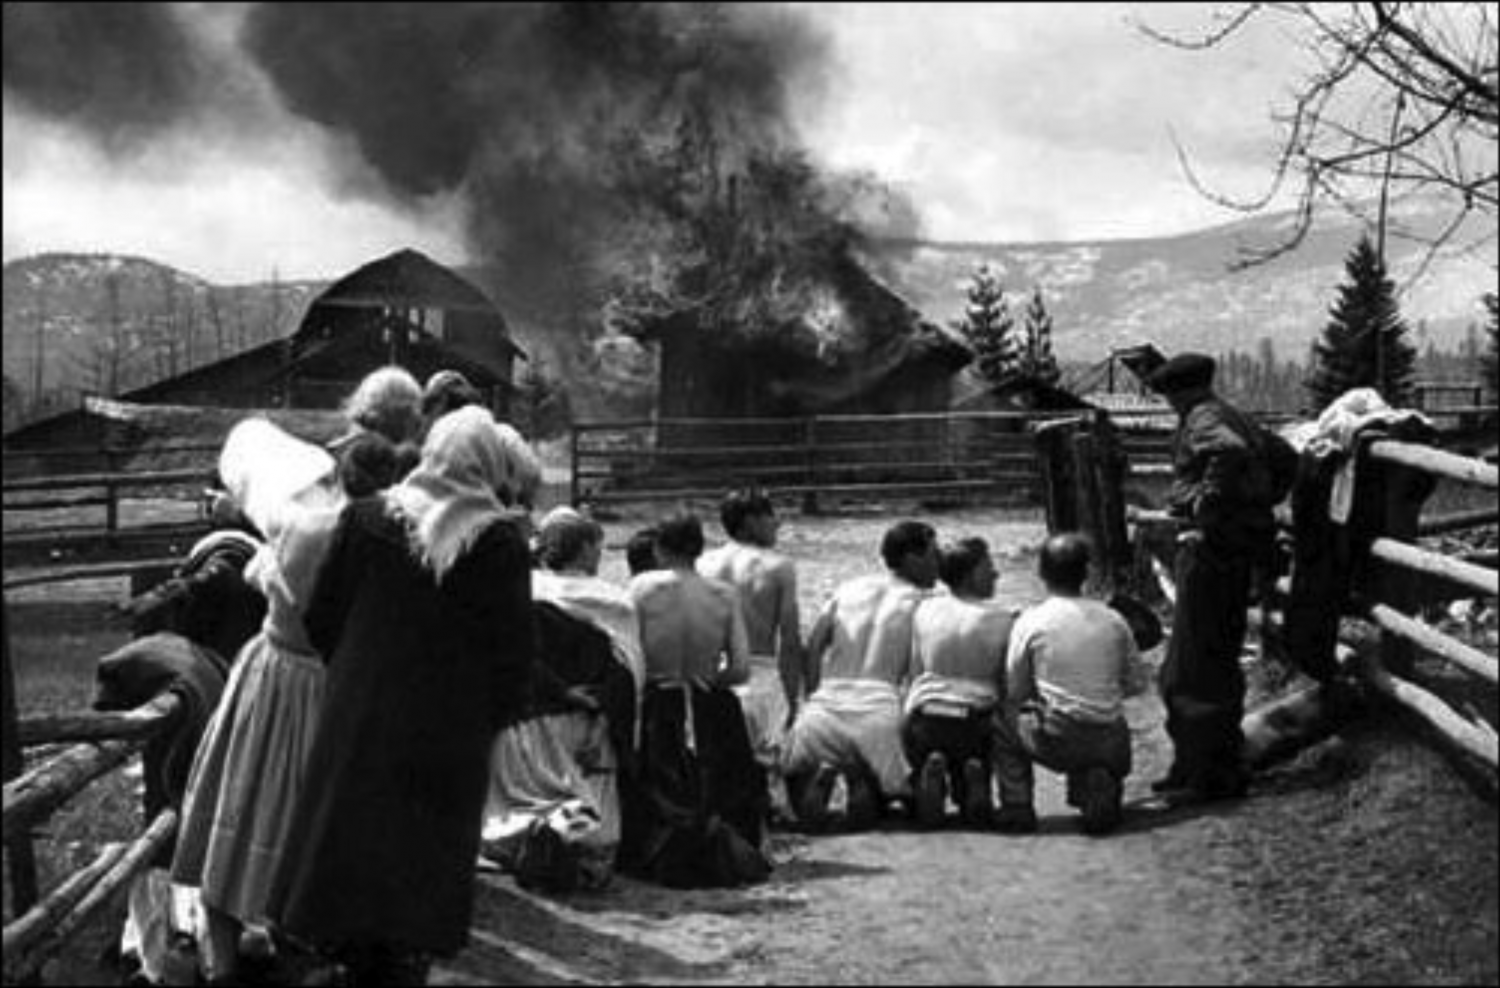 Doukhobor men and women kneel on road facing a burning house, Krestova, B.C., ca. 1950